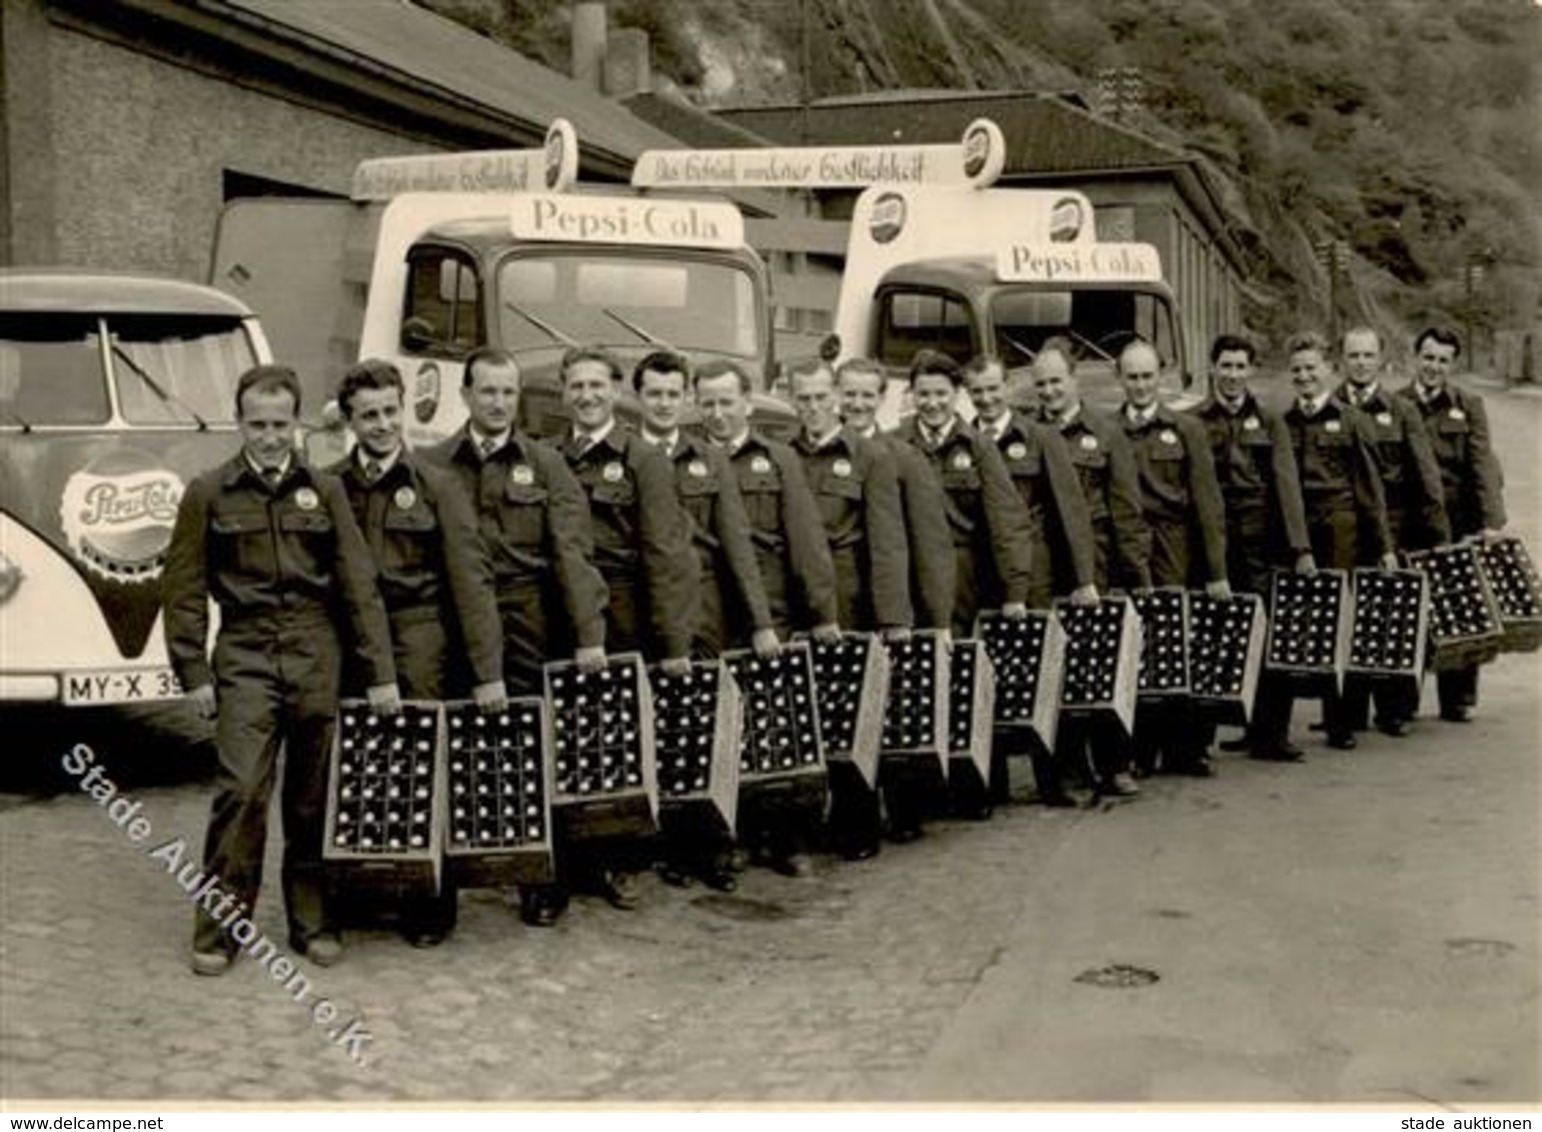 PEPSI-COLA - Seltene Werbekarte Mit Pepsi-VW-Bussen V. 1950 I-II - Pubblicitari